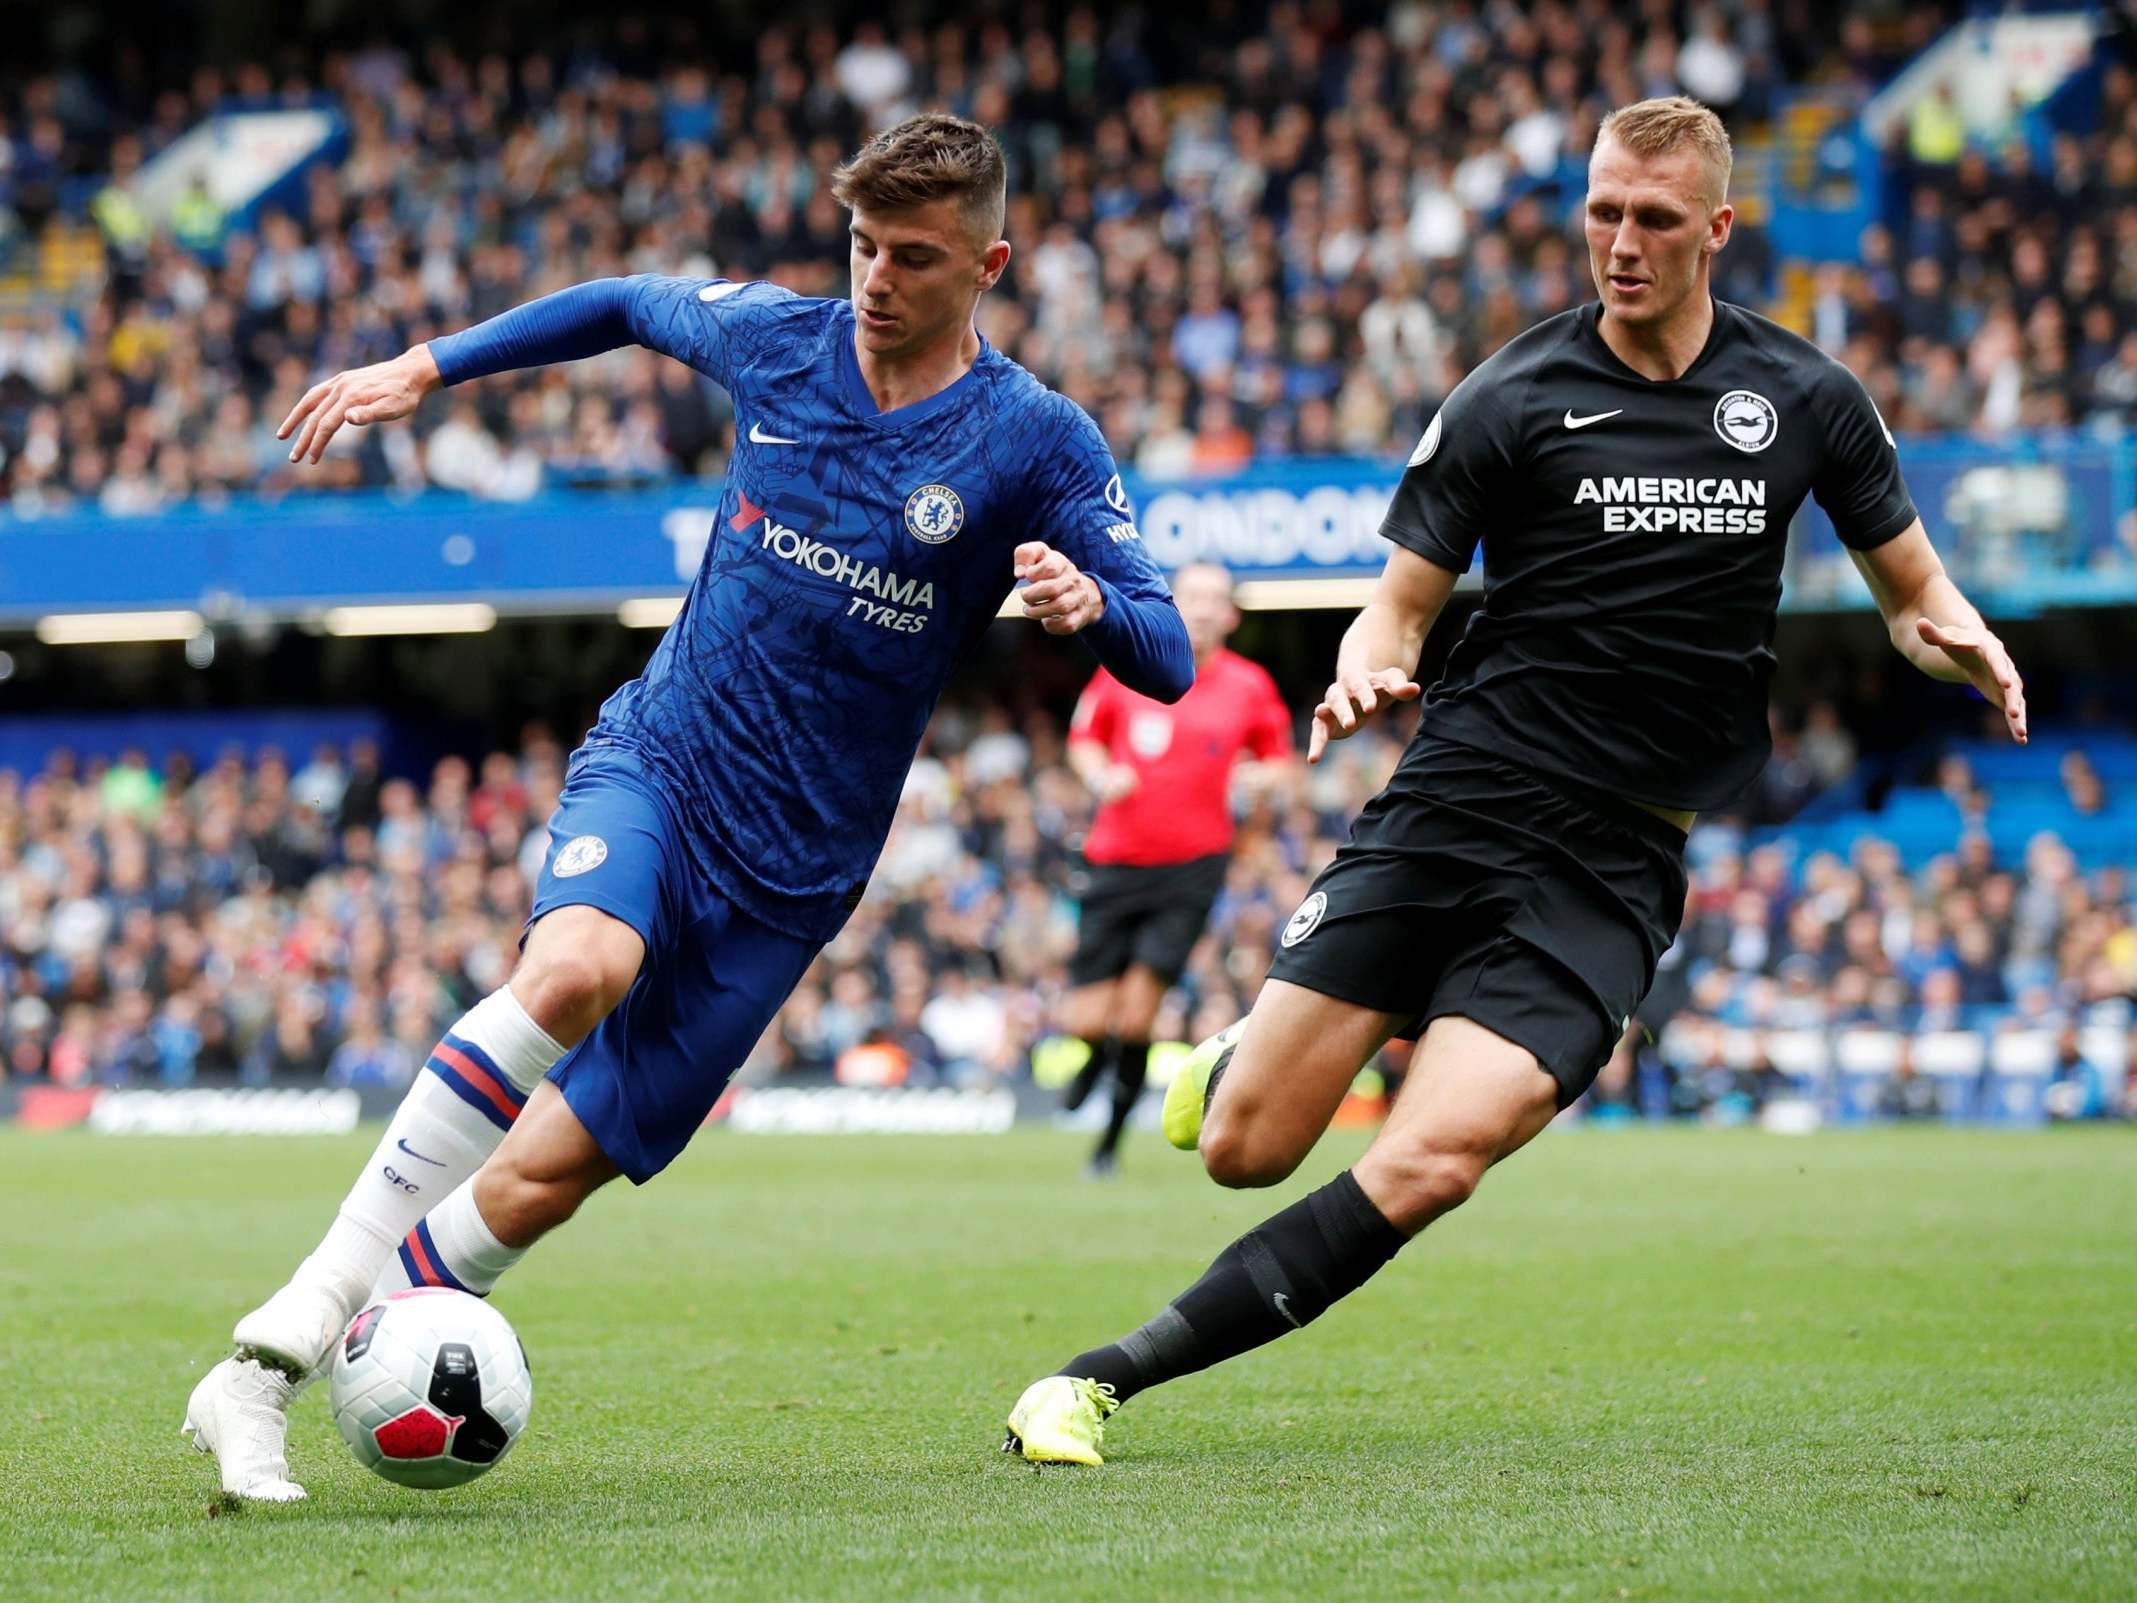 Chelsea vs Brighton LIVE: Latest score, goals and updates from Premier League fixture